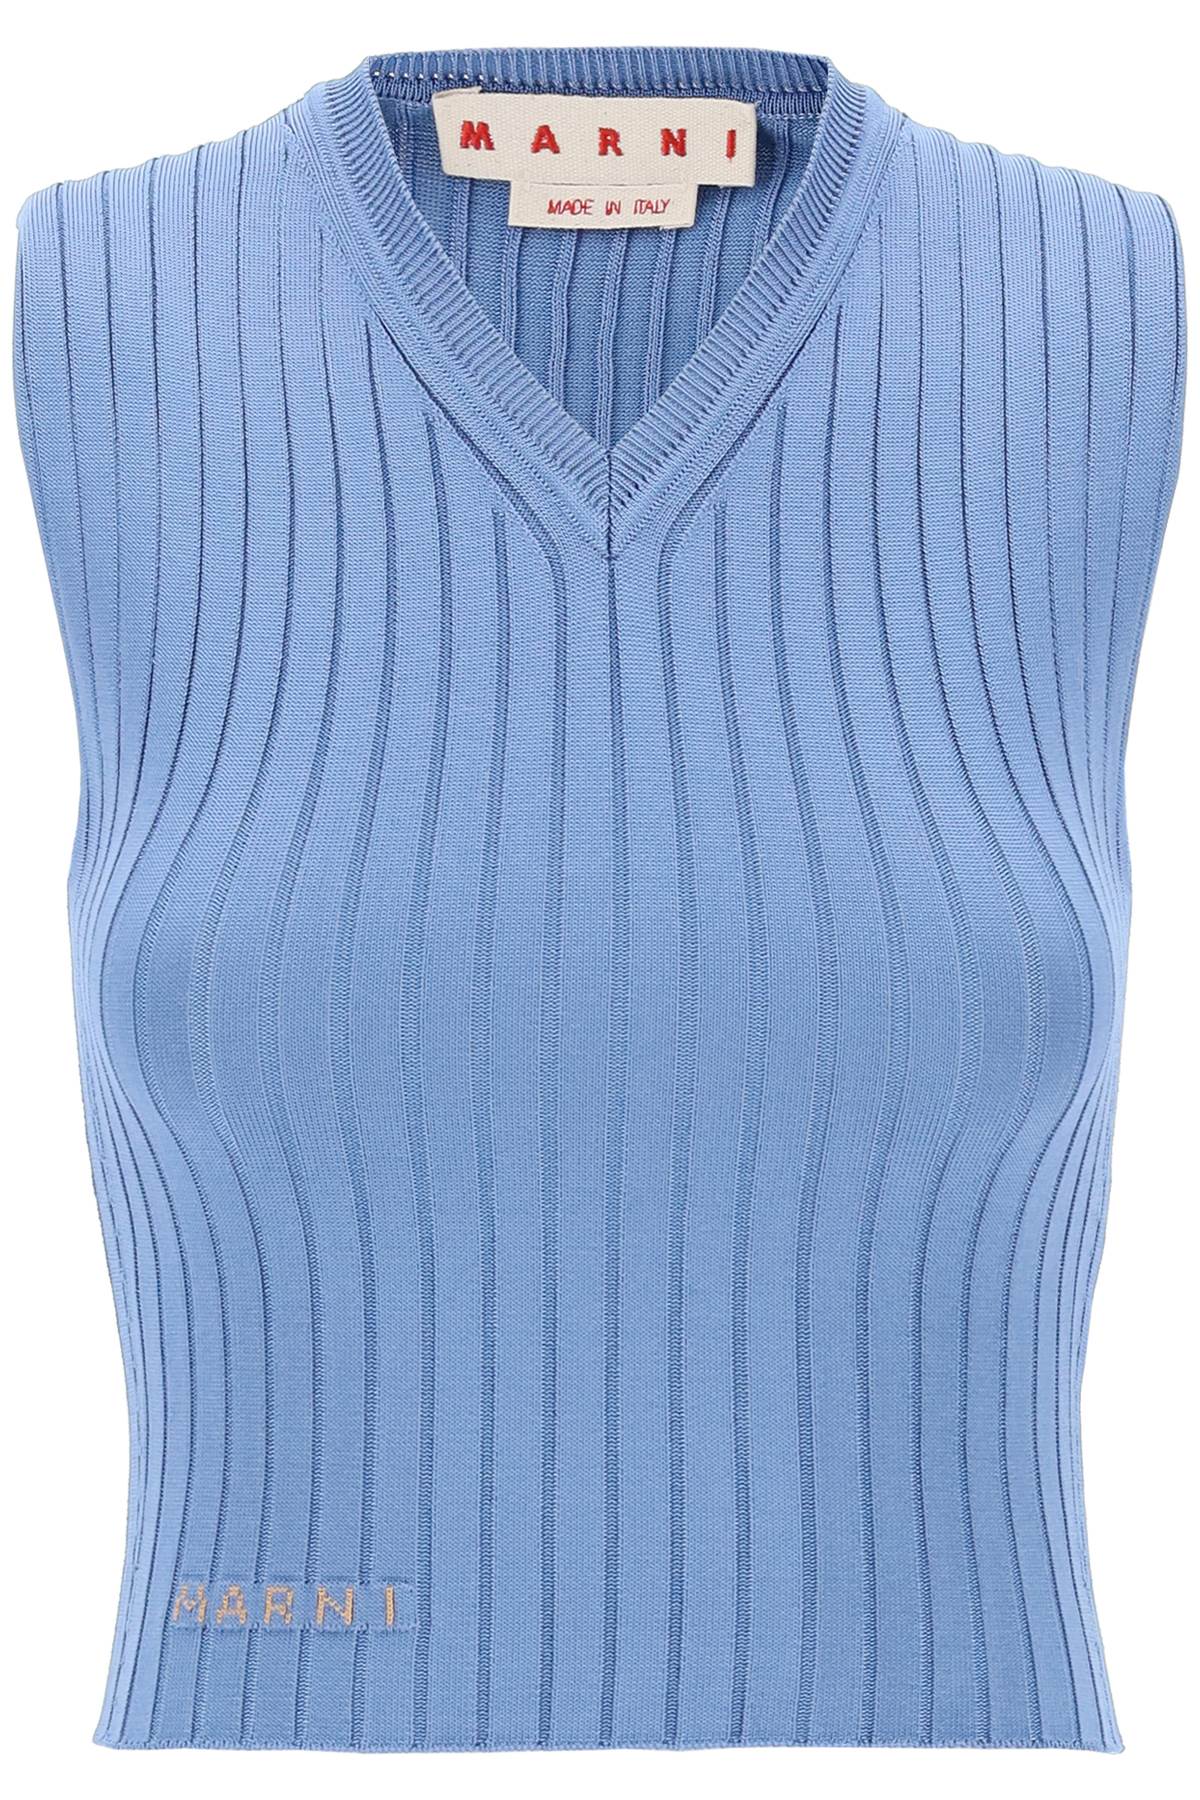 Marni sleeveless ribbed knit top CVMD0121A0UFV222 OPAL